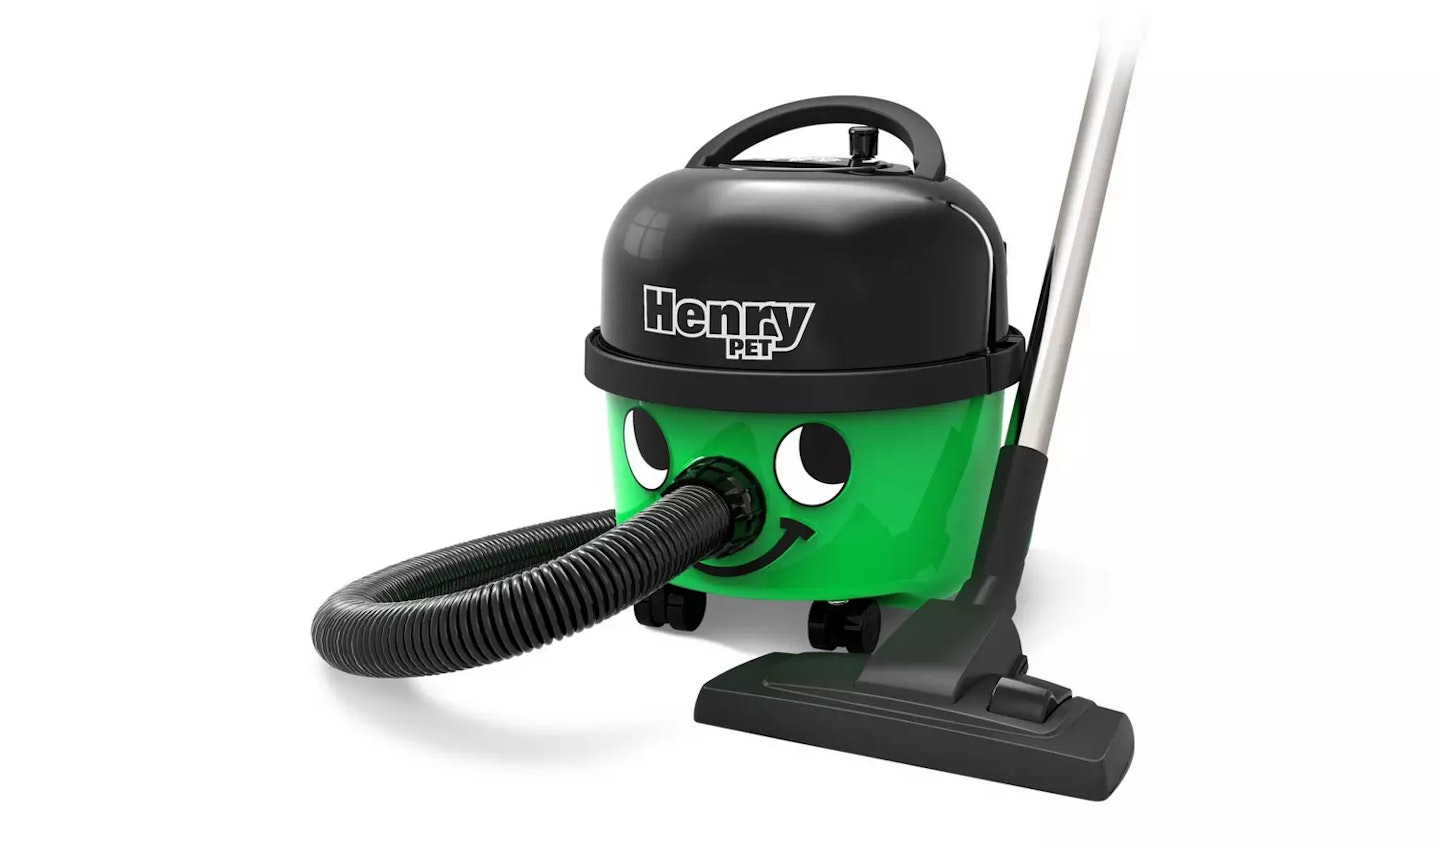 Henry - Black Friday vacuum cleaner deals